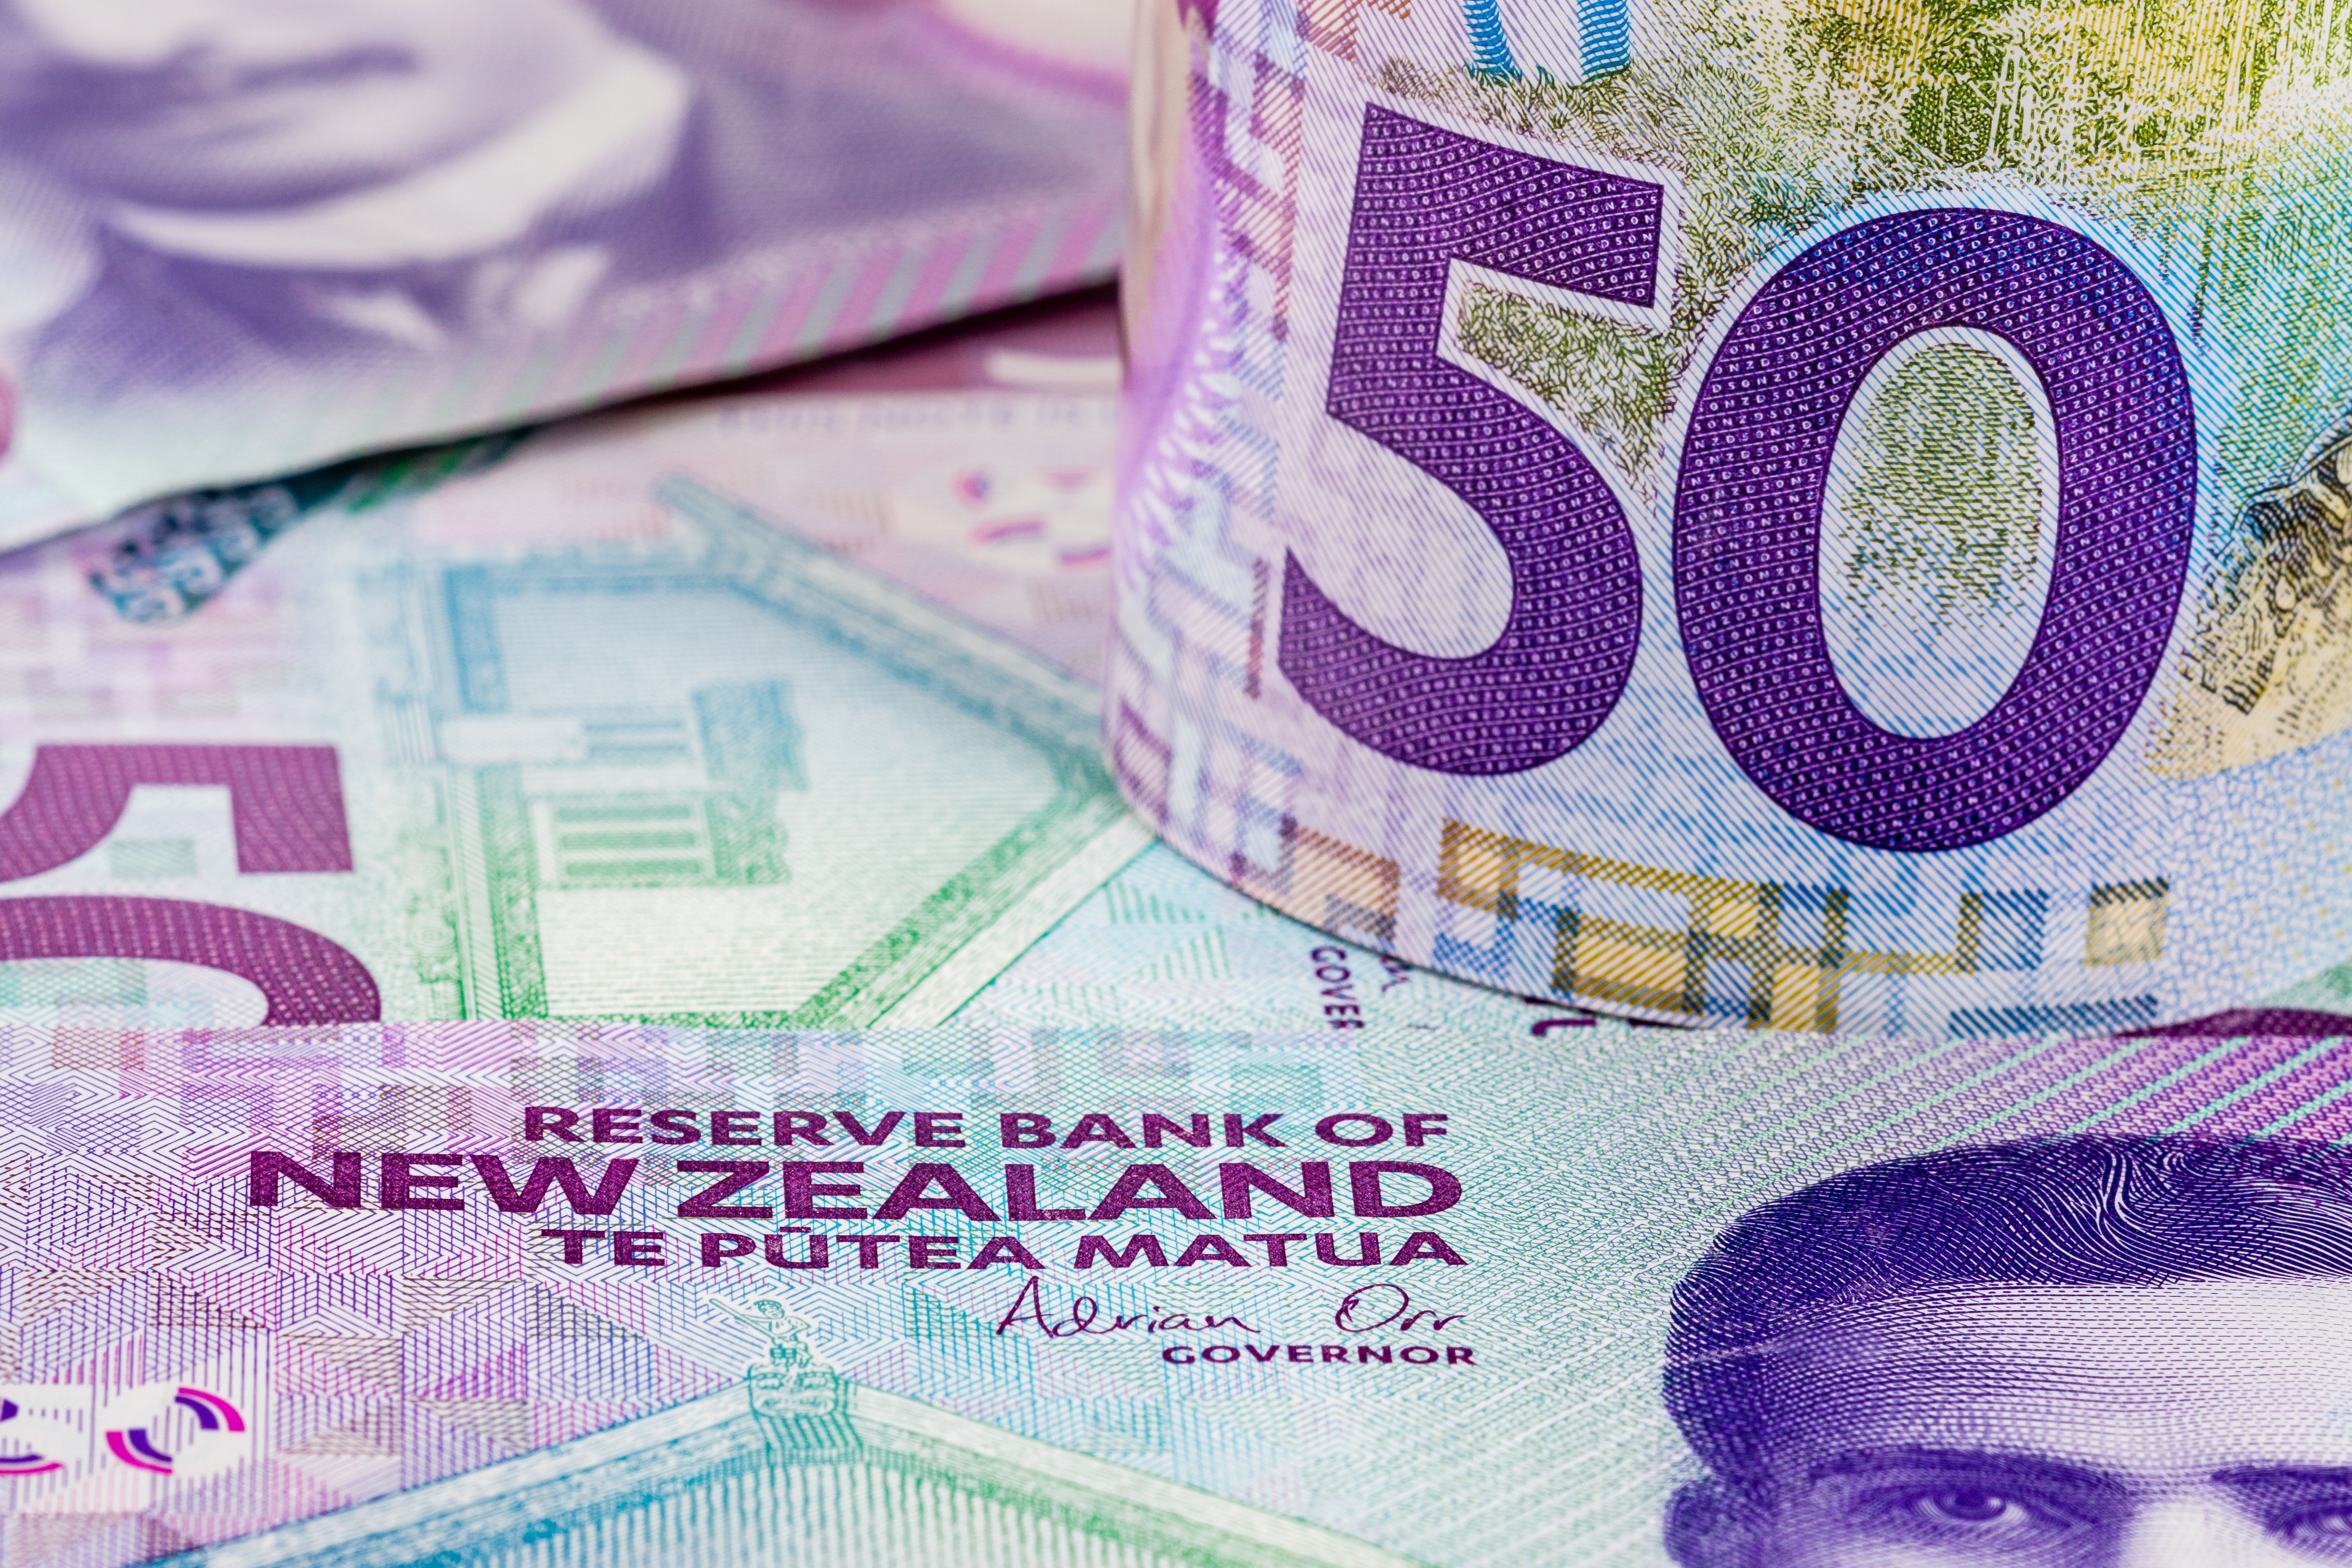 currency-new-zealand-dollar-banknotes-2023-11-27-05-25-02-utc.jpg